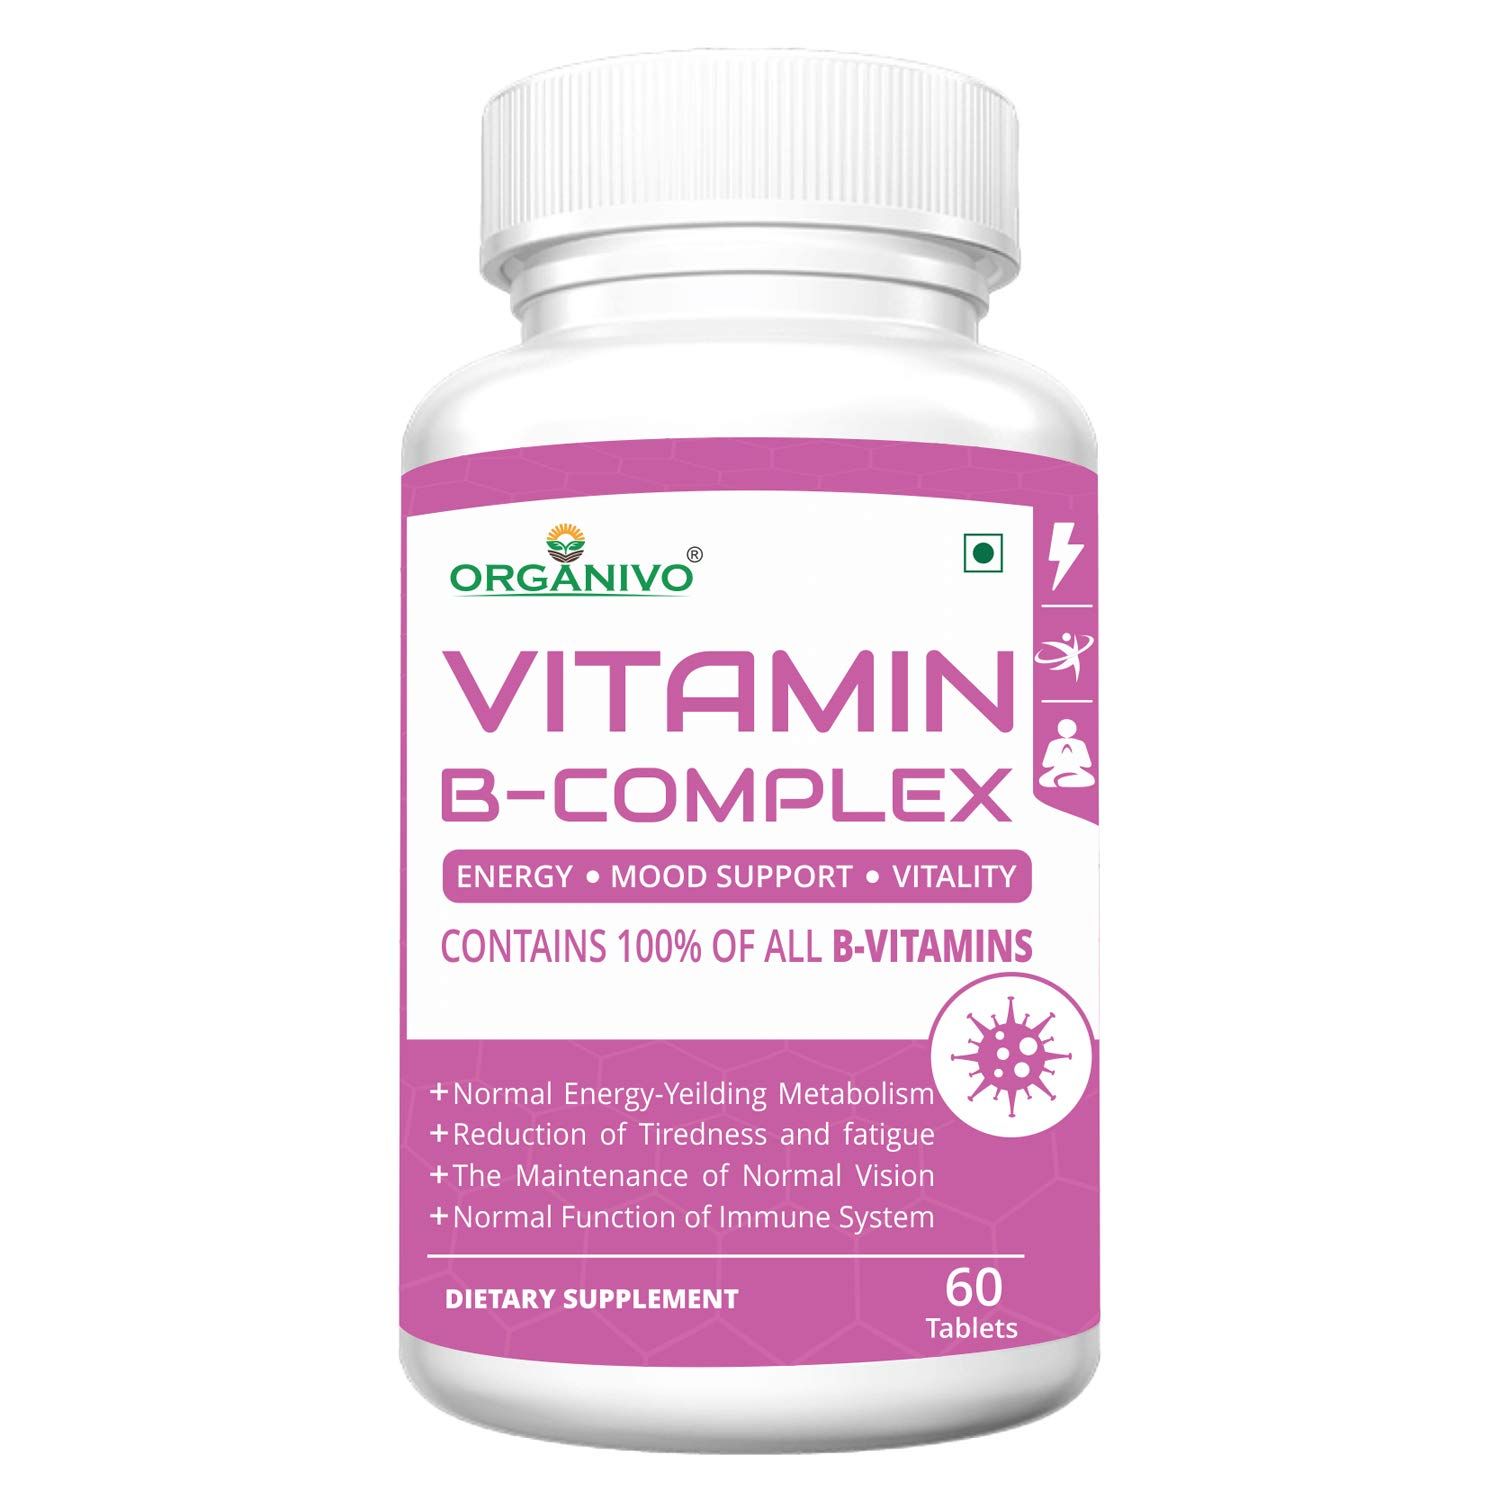 Organivo Vitamin B Complax Supplement Tablets Image